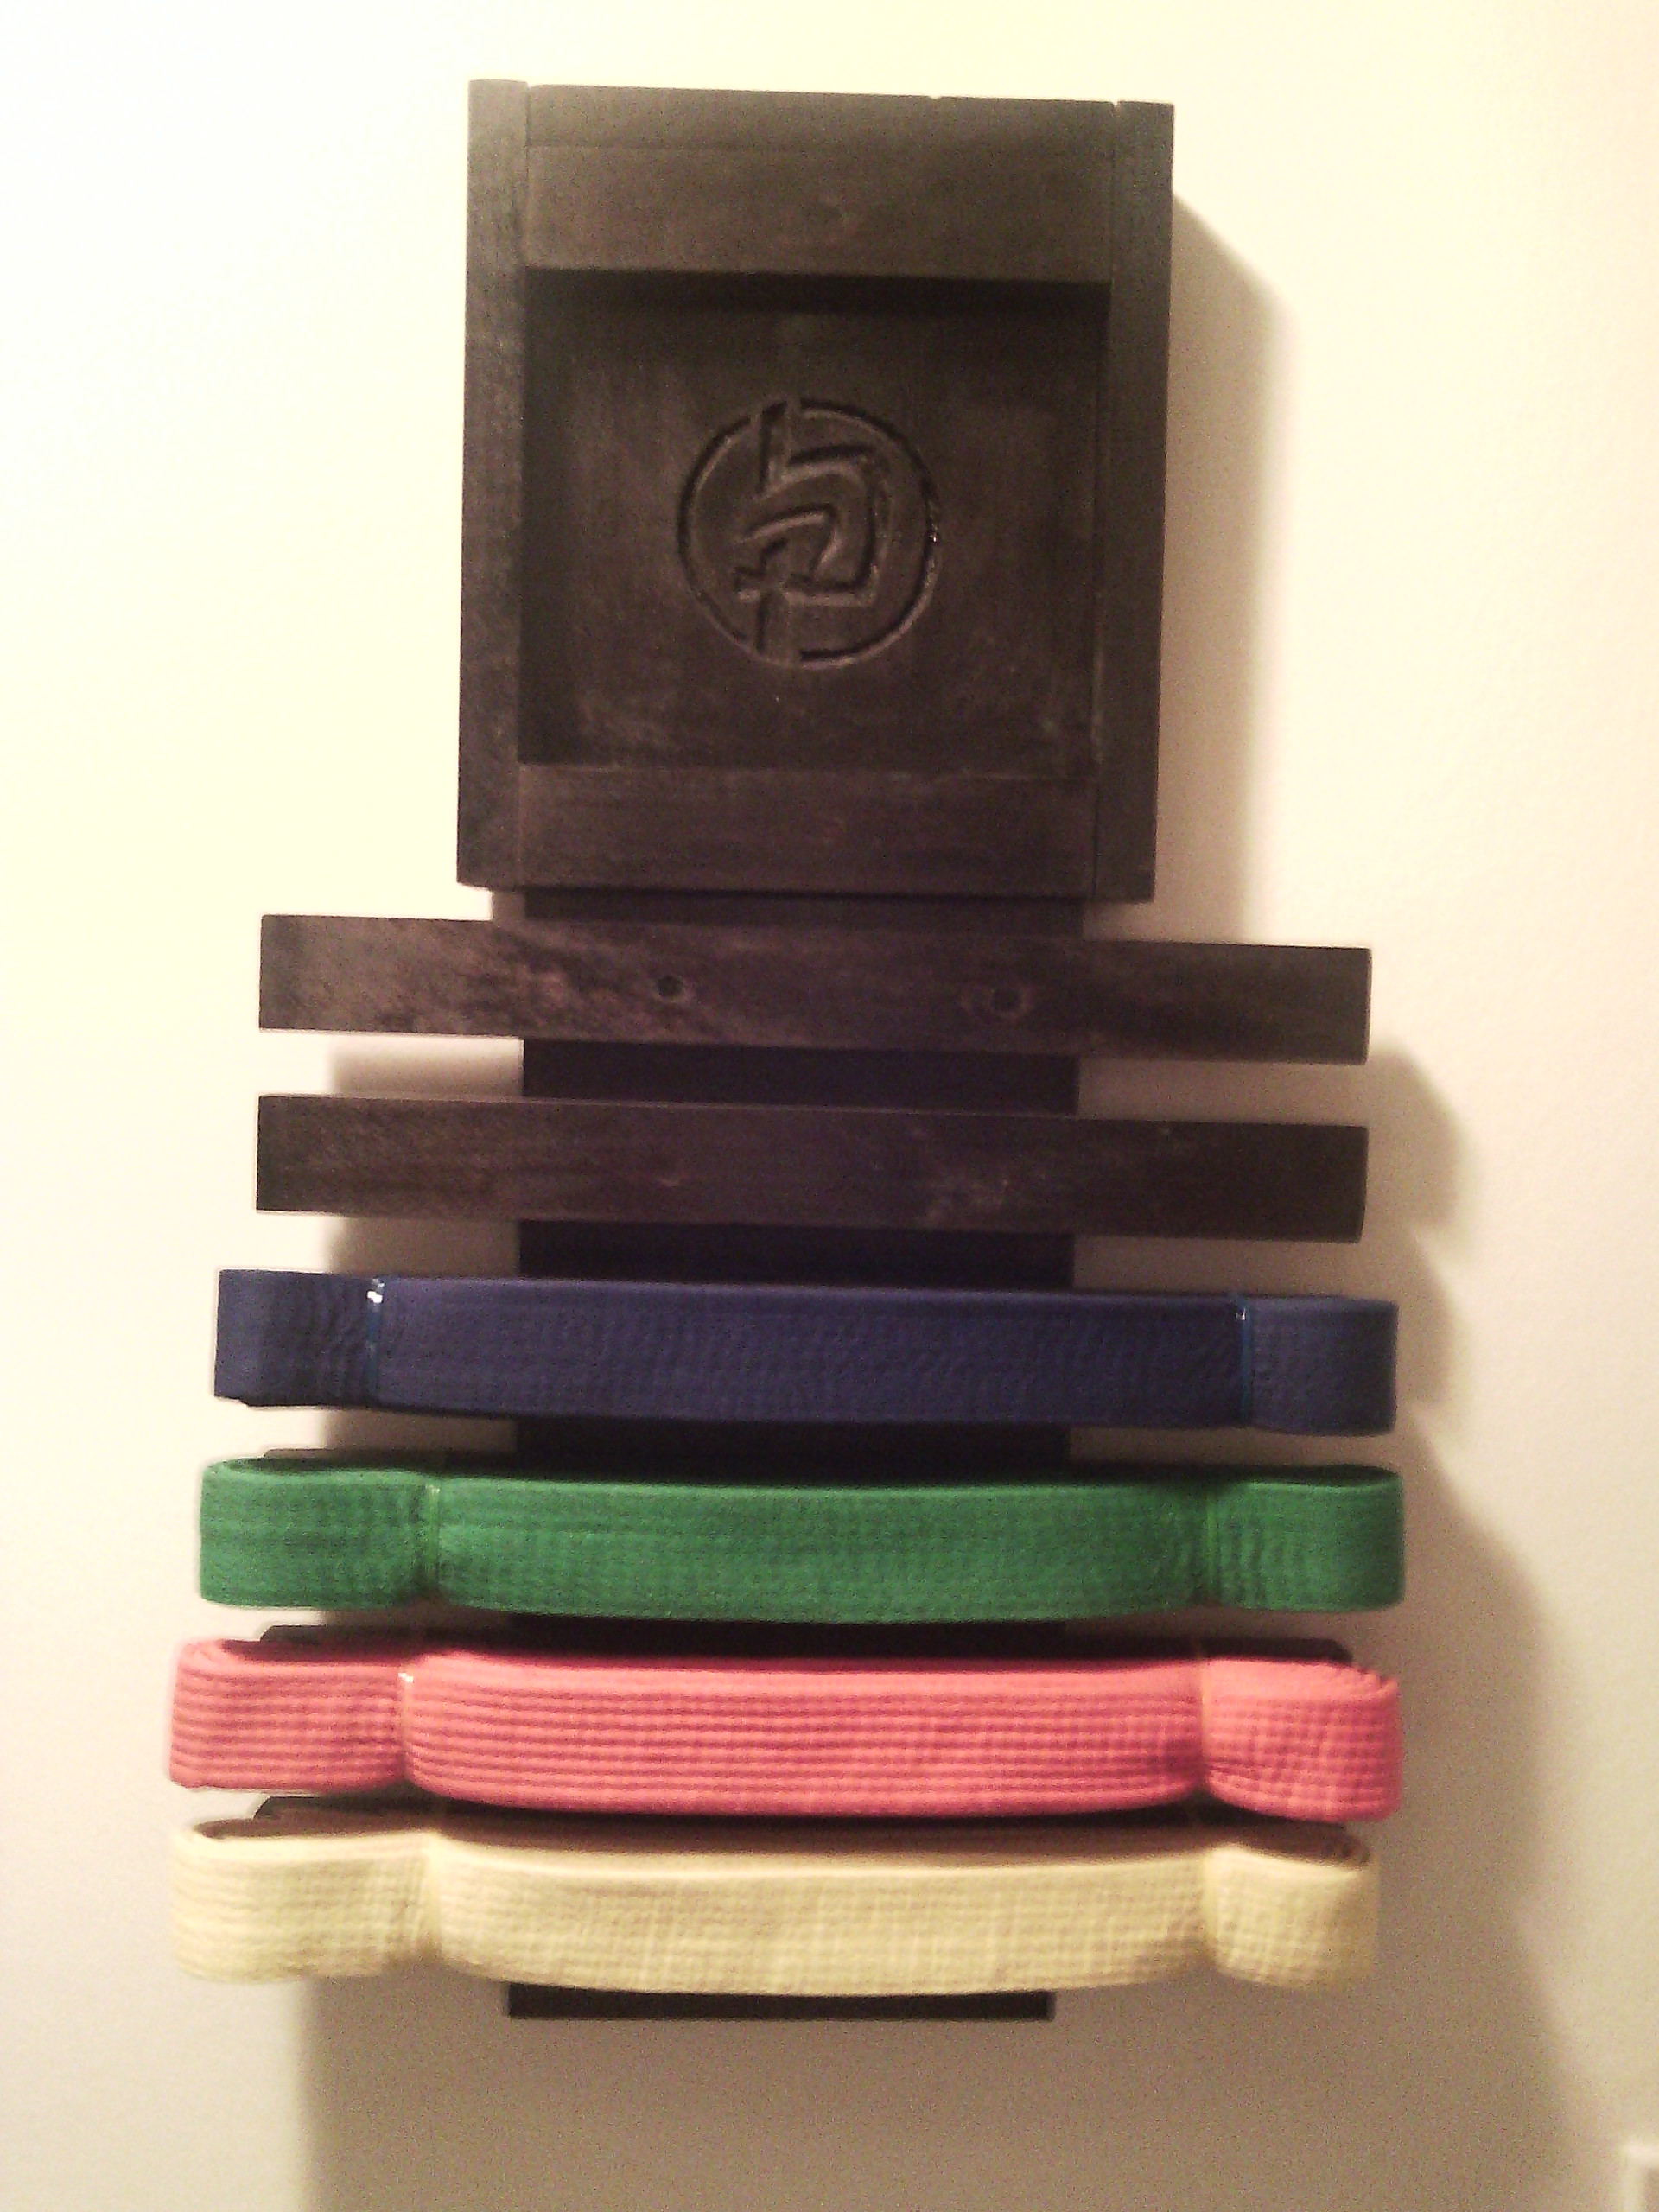 Krav Maga belt rack with Blue Belt attached. Finally awarded it in Dec. 2014